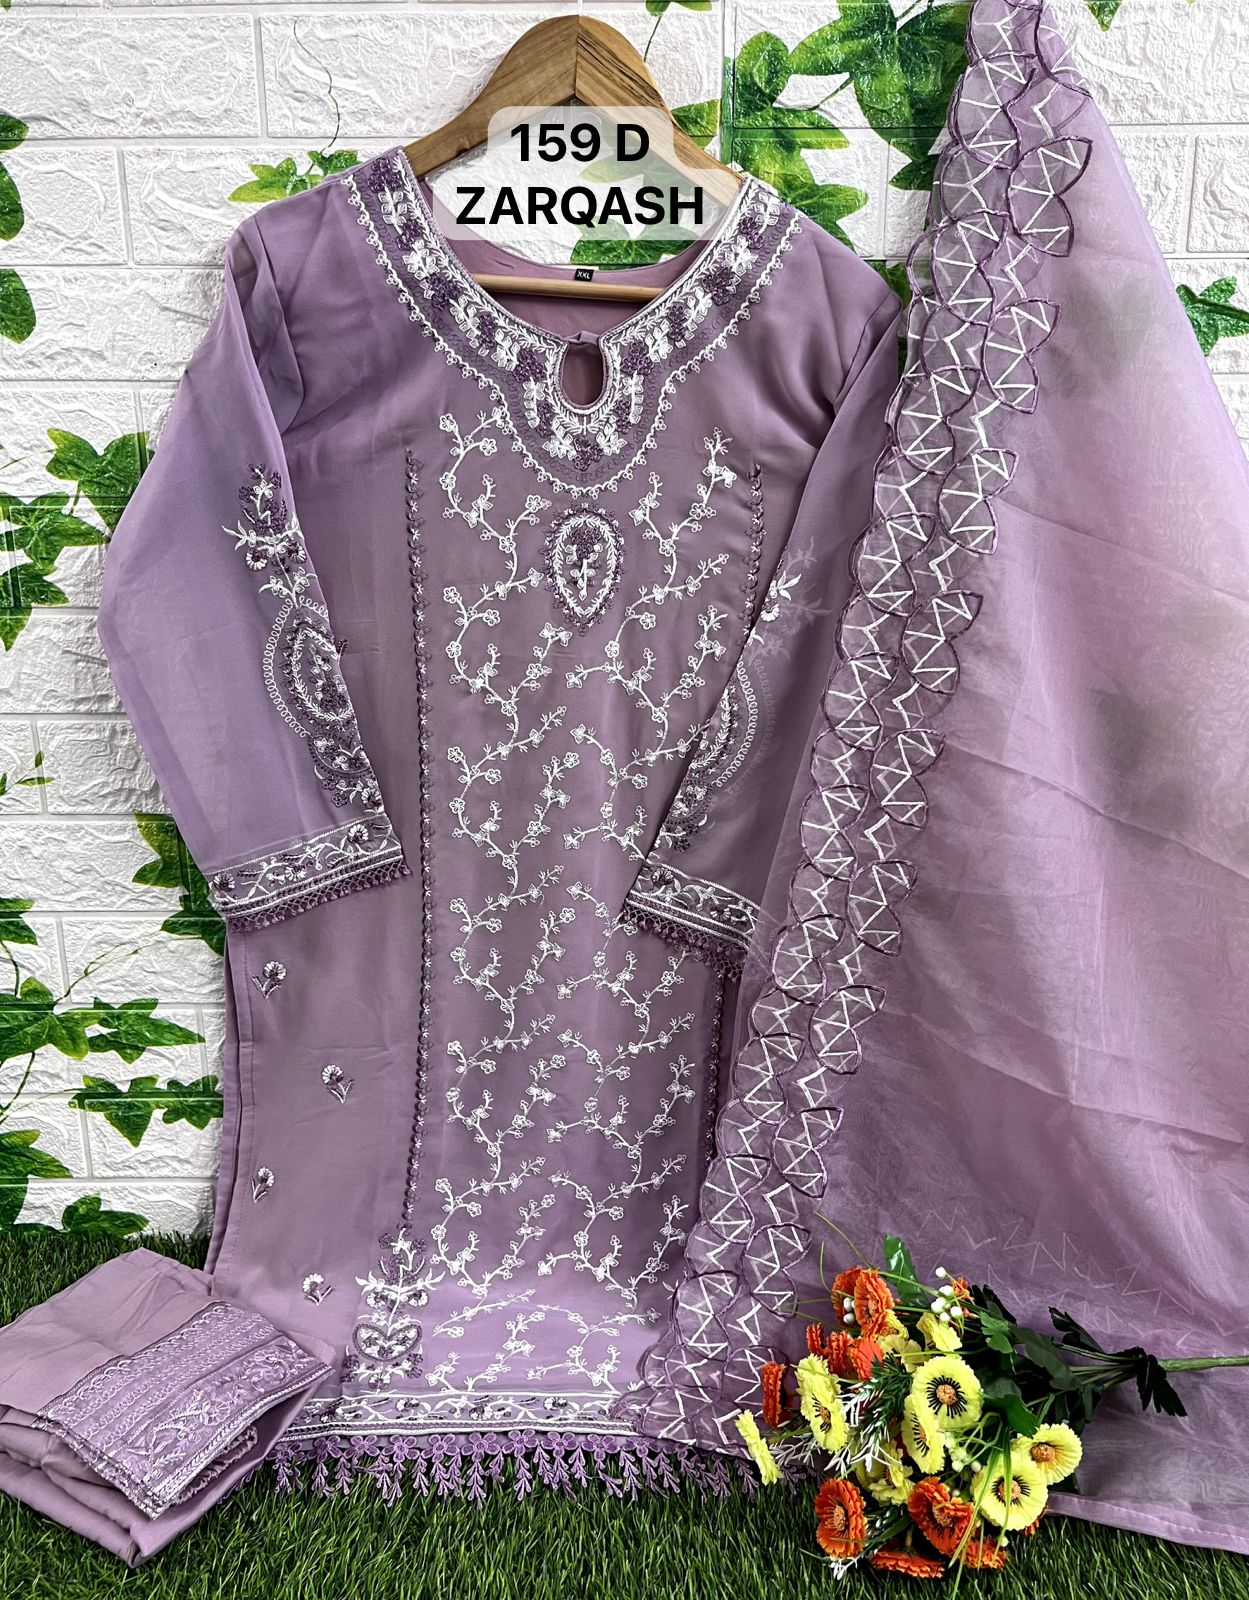 Zarqash Z 159 collection 3